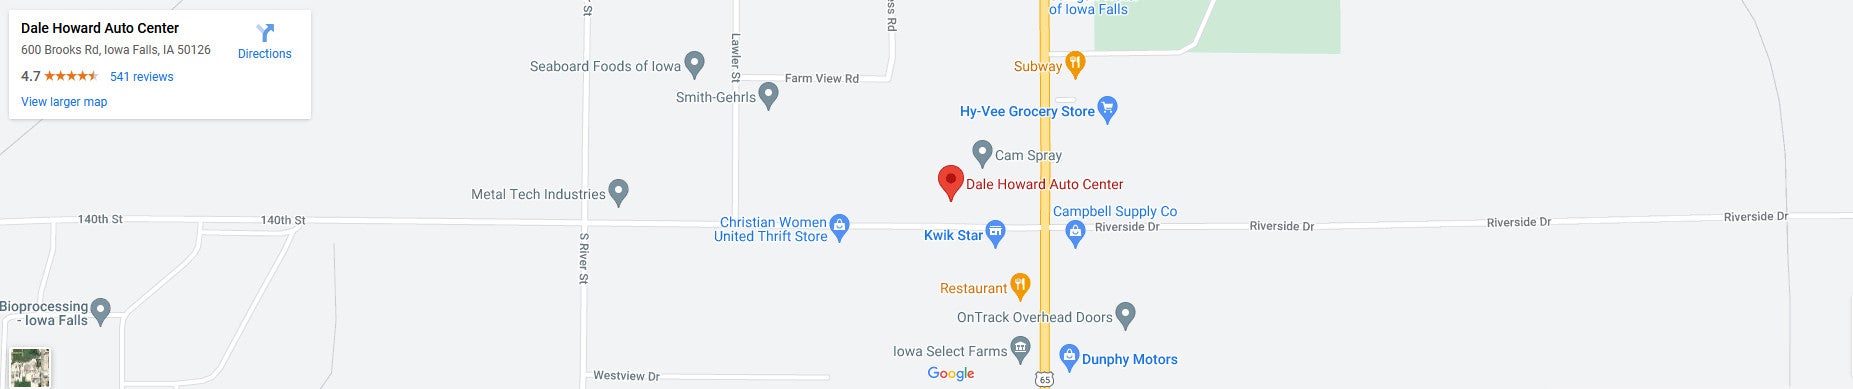 Dale Howard Auto Center in Iowa Falls IA